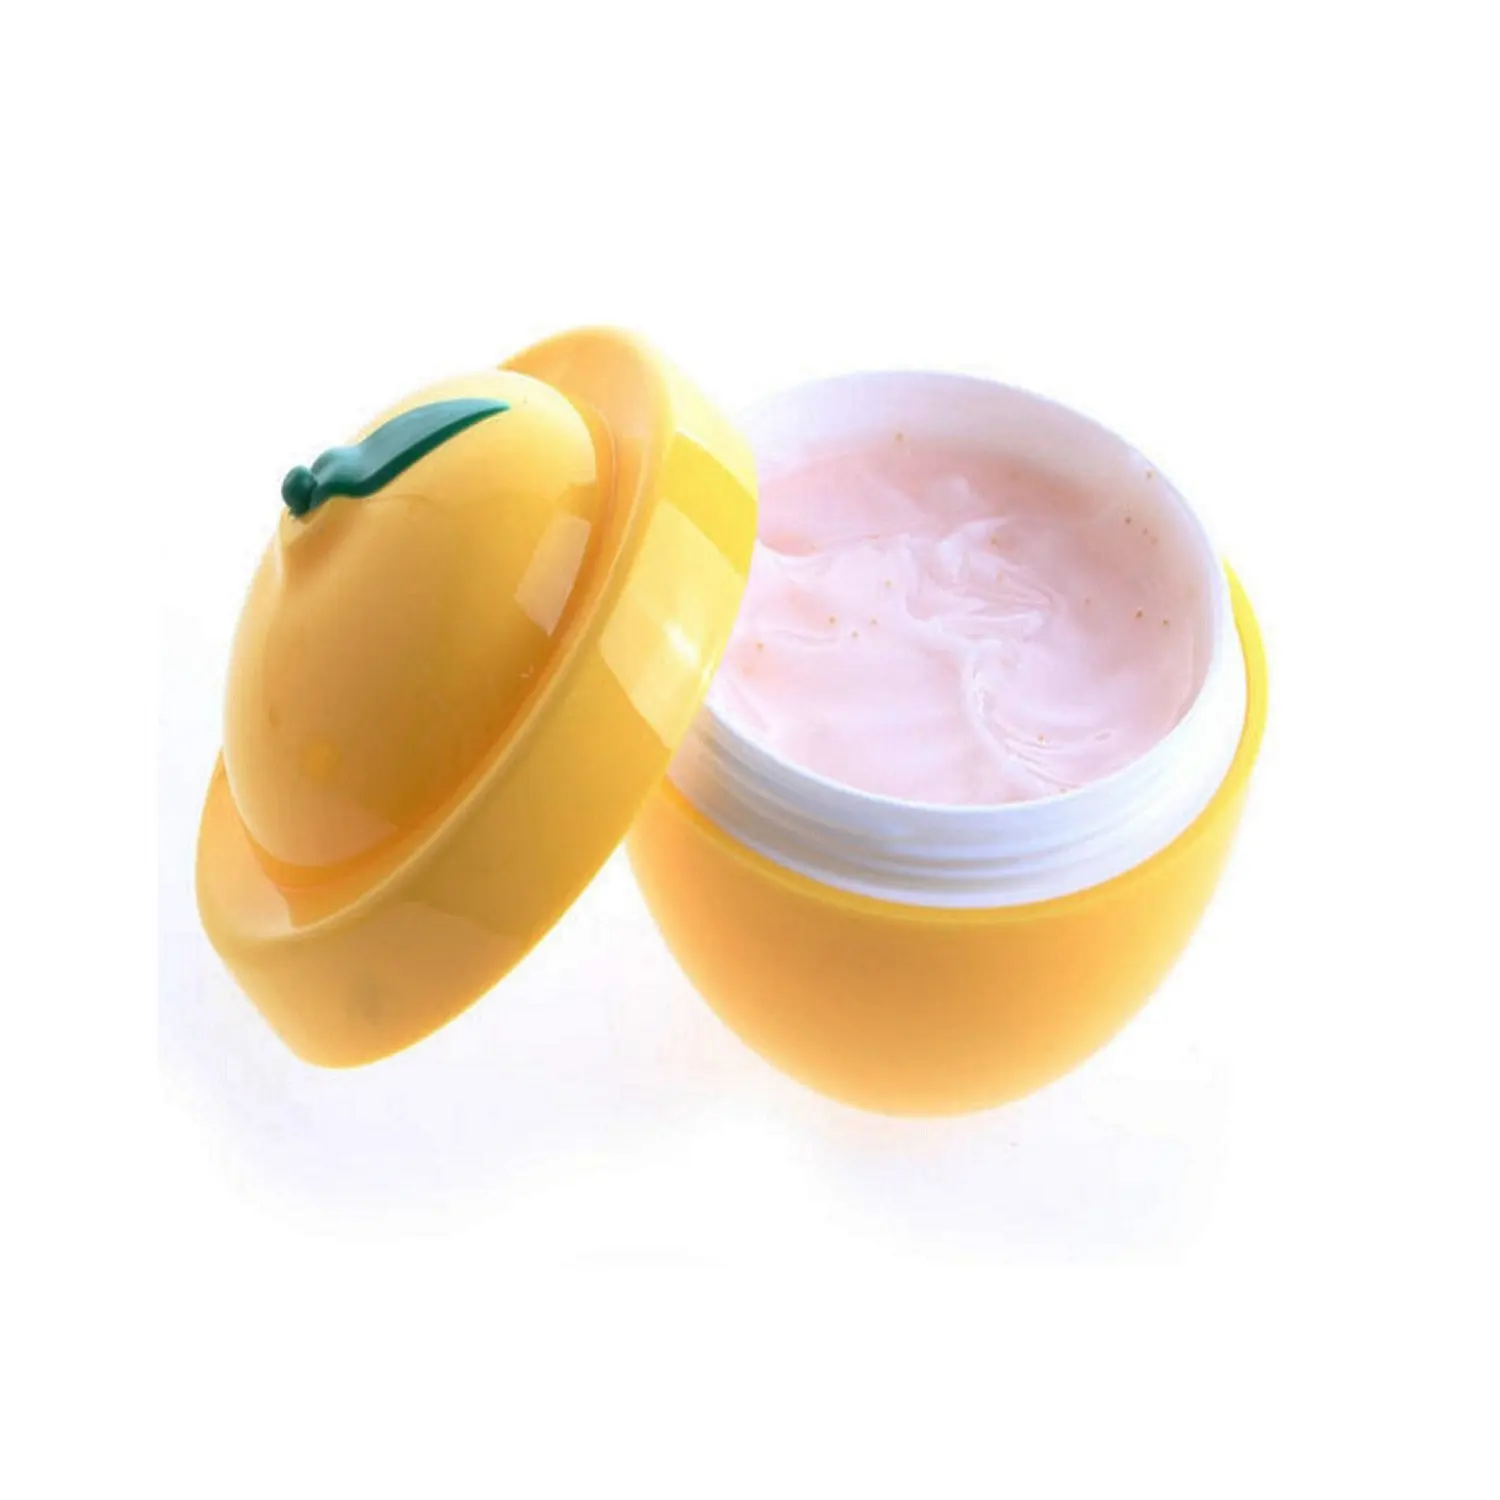 URBAN DOLLKISS Lemon Vitamin Whitening Sleeping Pack Skin Care.